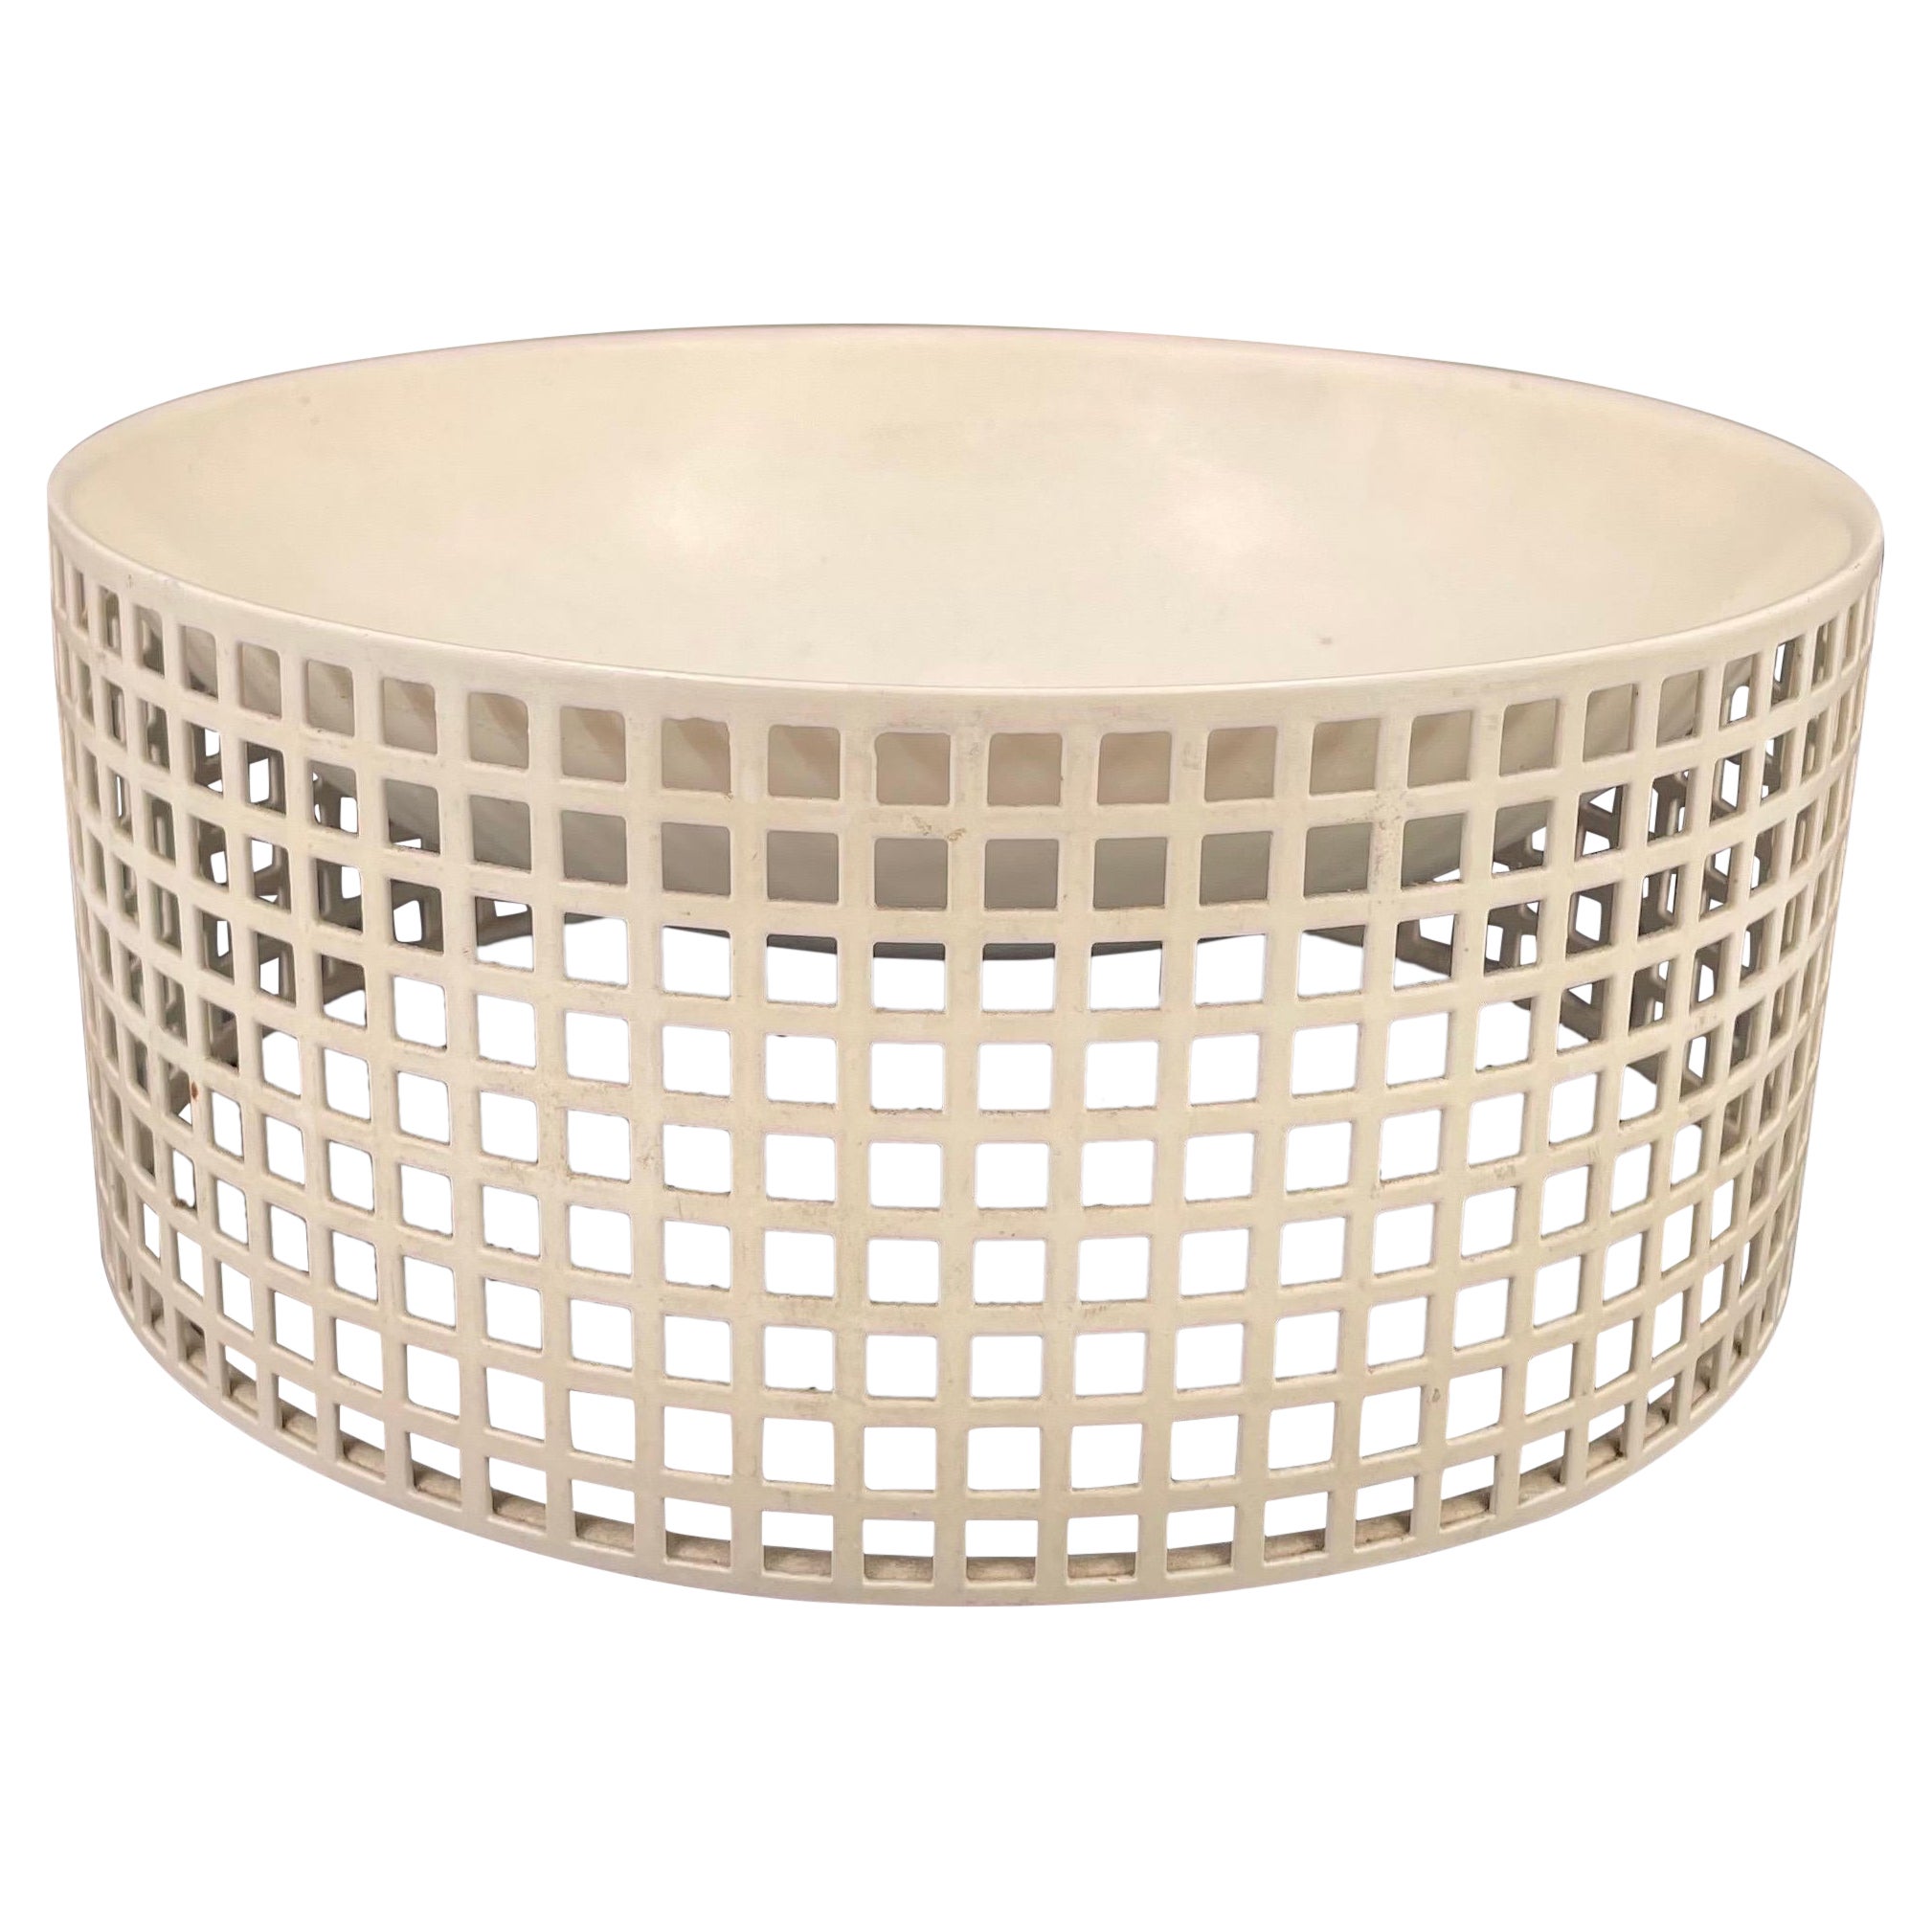 Rare Perforated Metal Bowl Designed by Joseph Hoffman for Bieffeplast